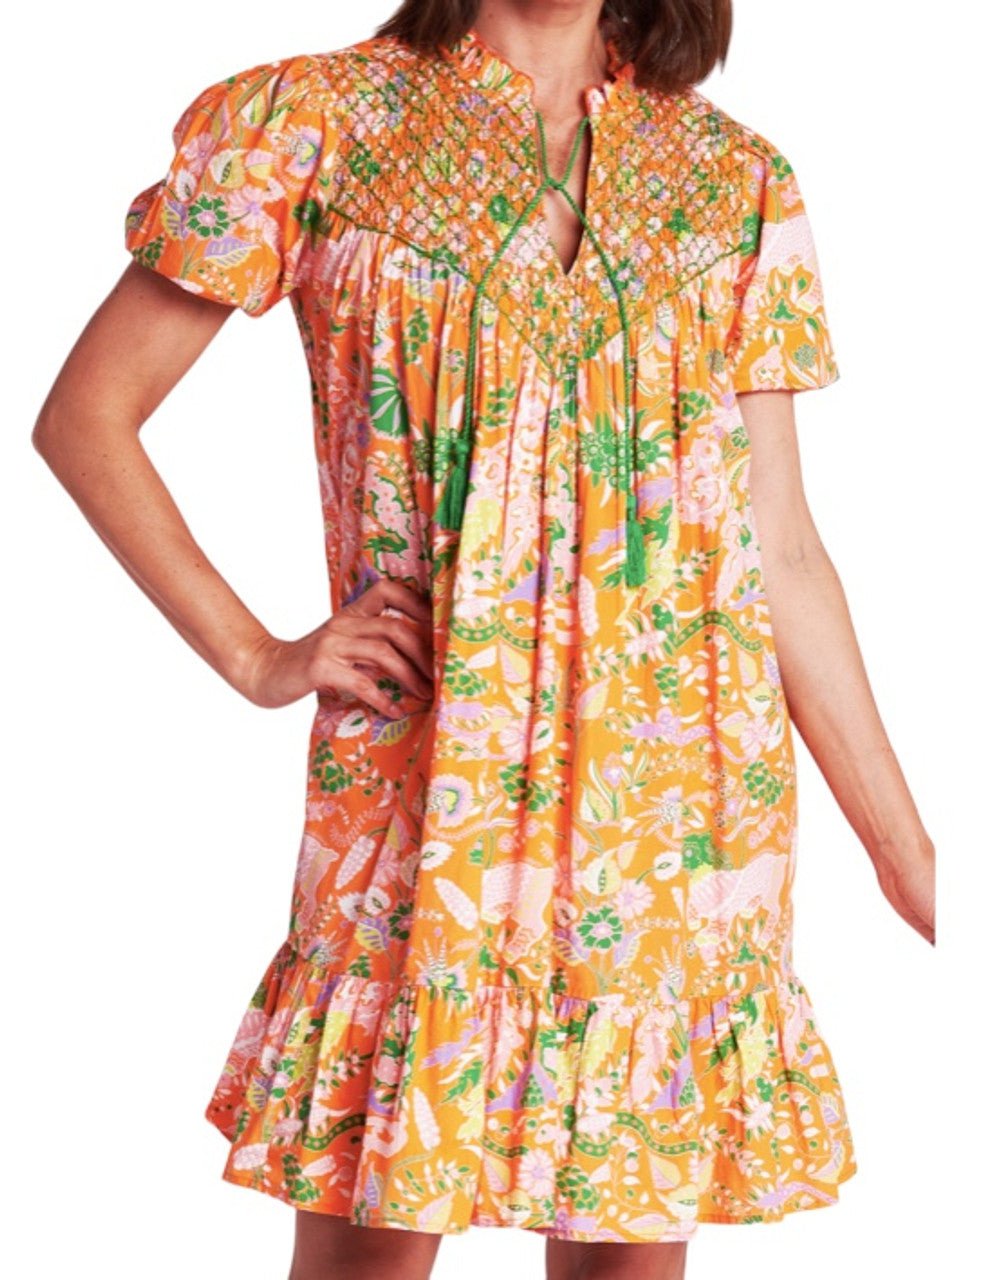 CK Bradley Dress Cayman Dress in Eden Orange